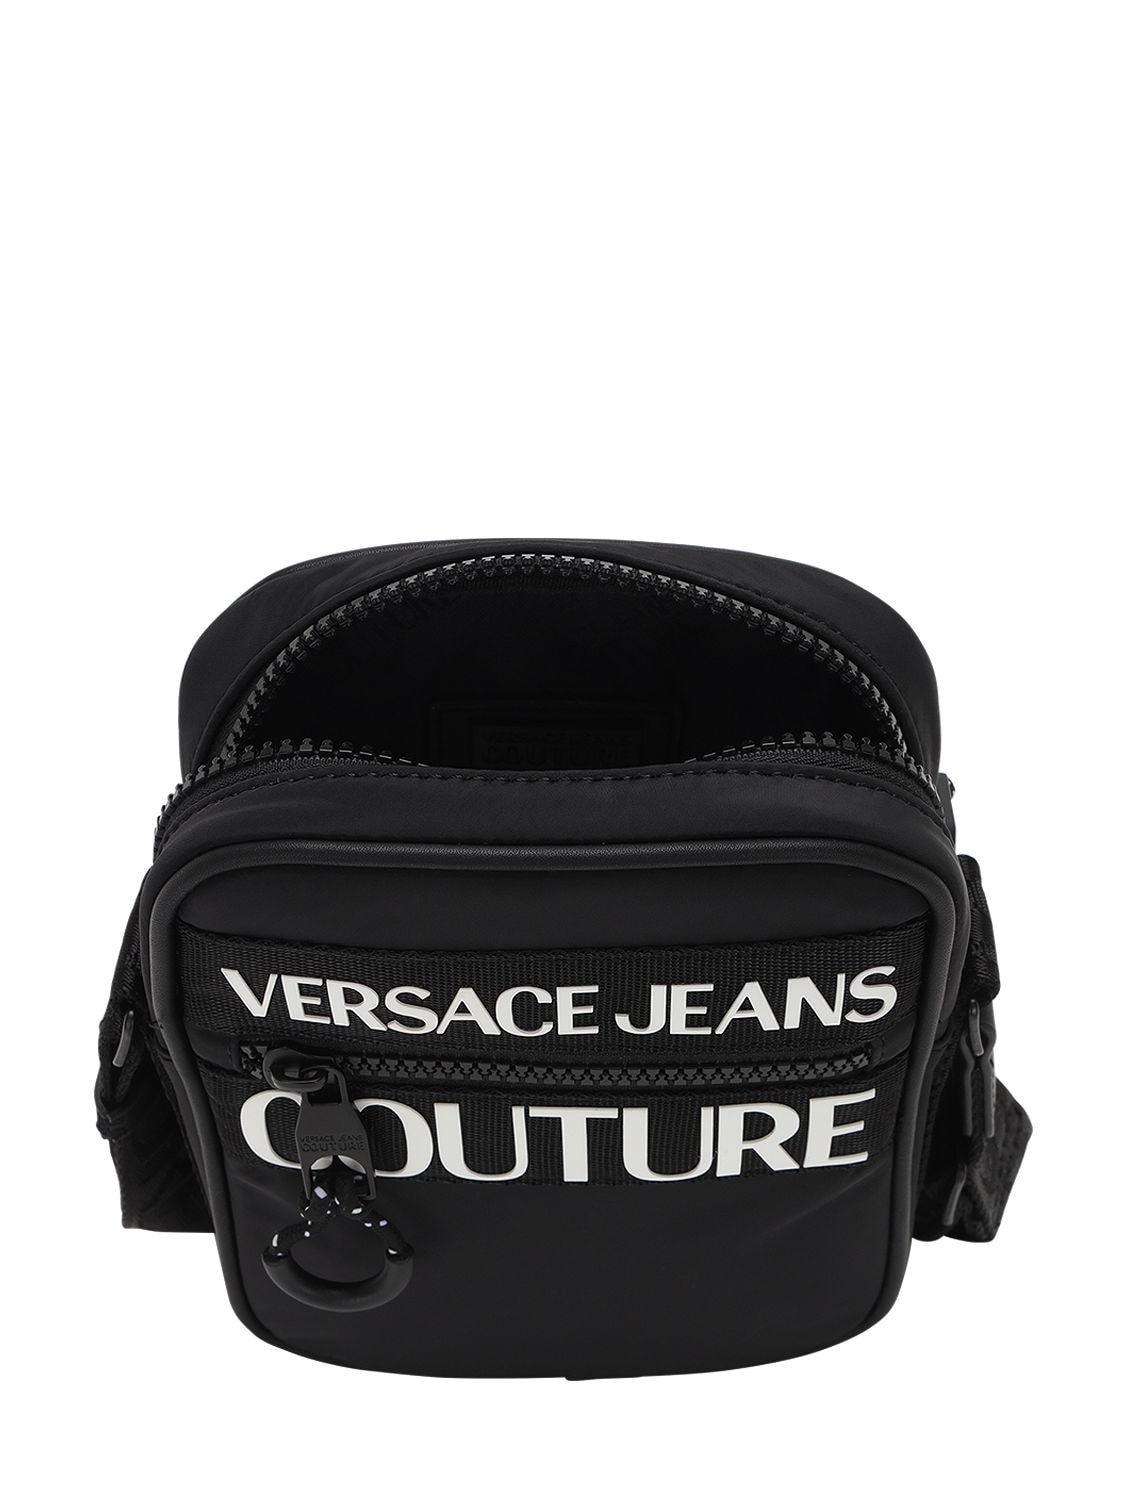 Versace Jeans Couture Logo Print Nylon Crossbody Bag In Black | ModeSens